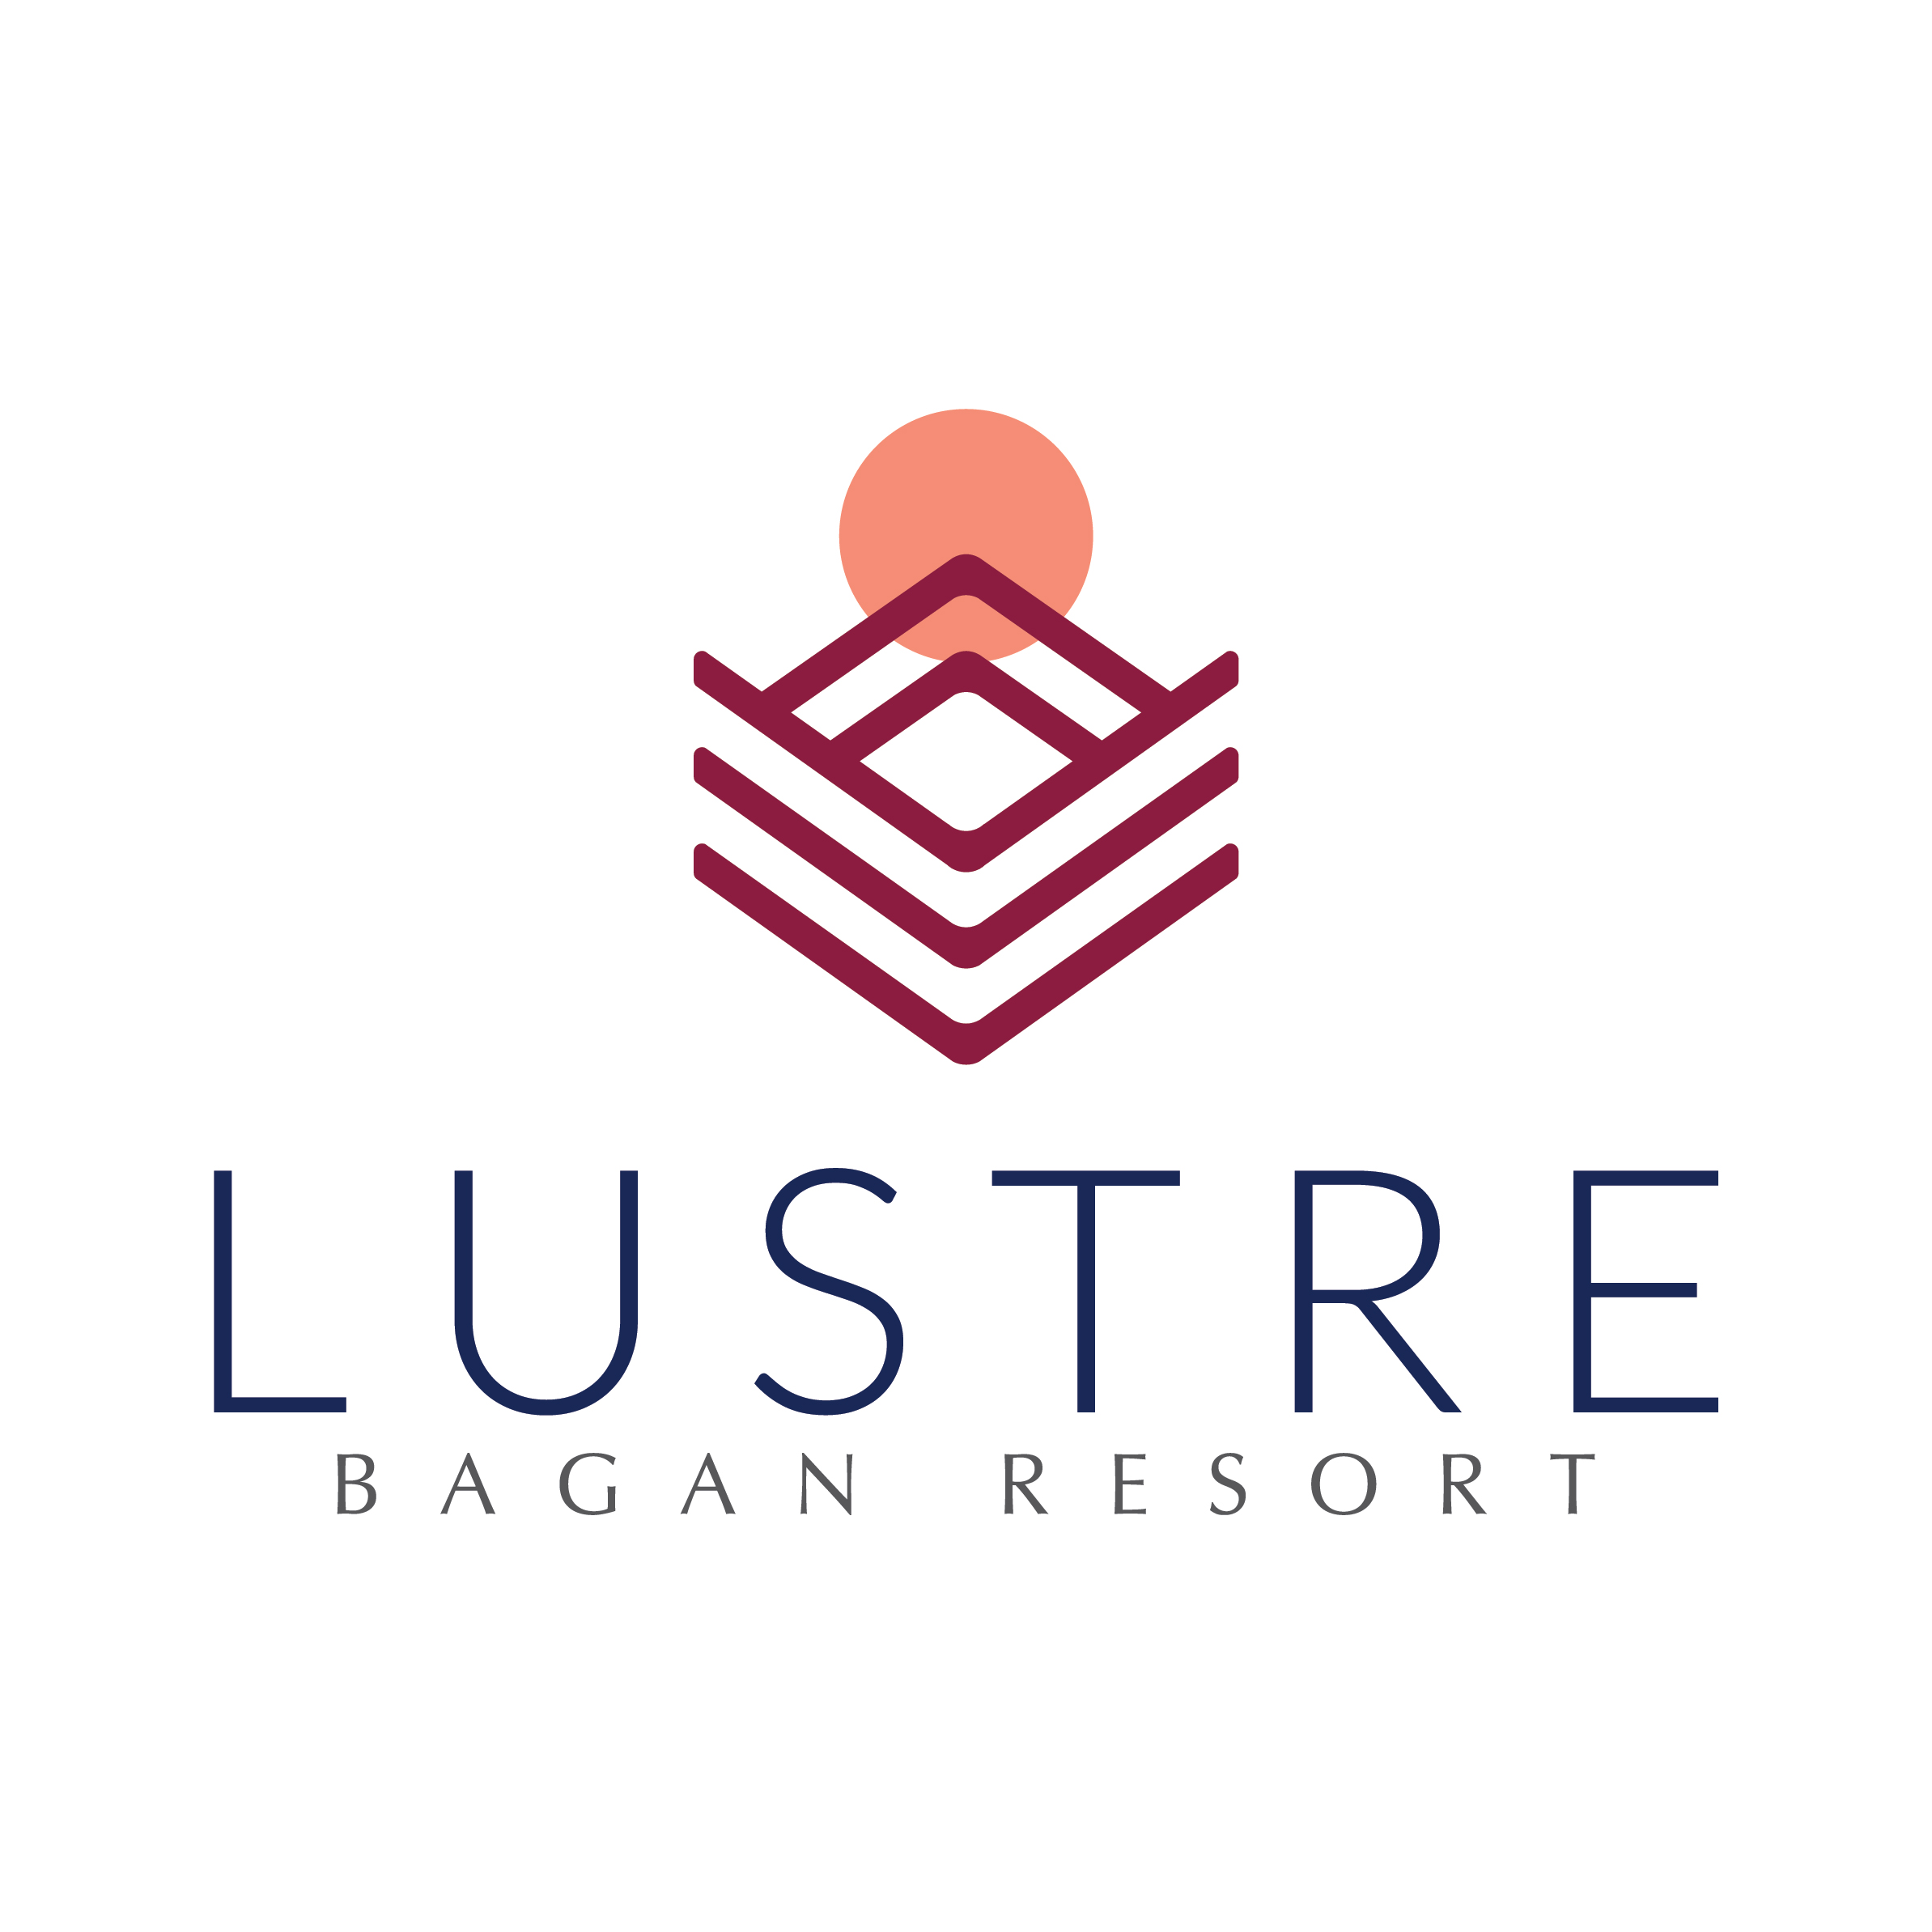 Lustre Resort Bagan logo